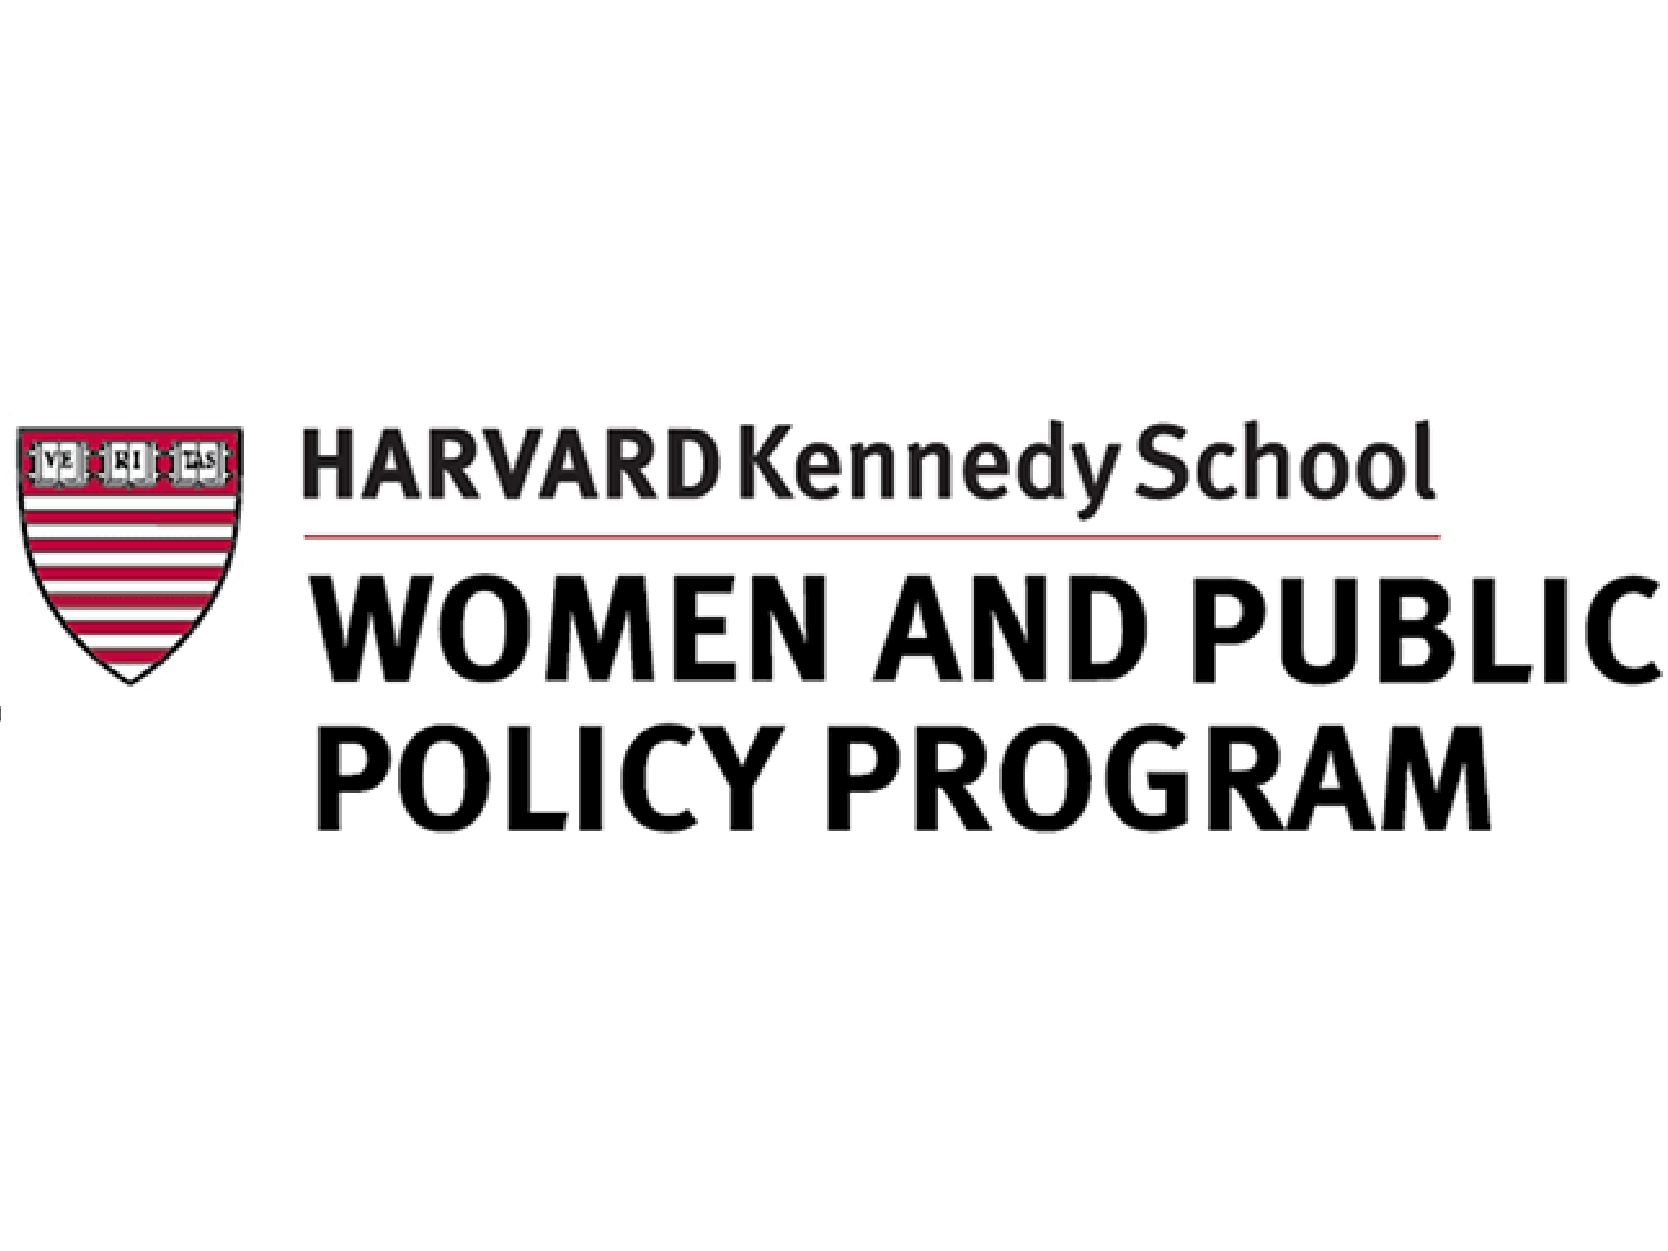 Harvard Kennedy School’s Women and Public Policy Program